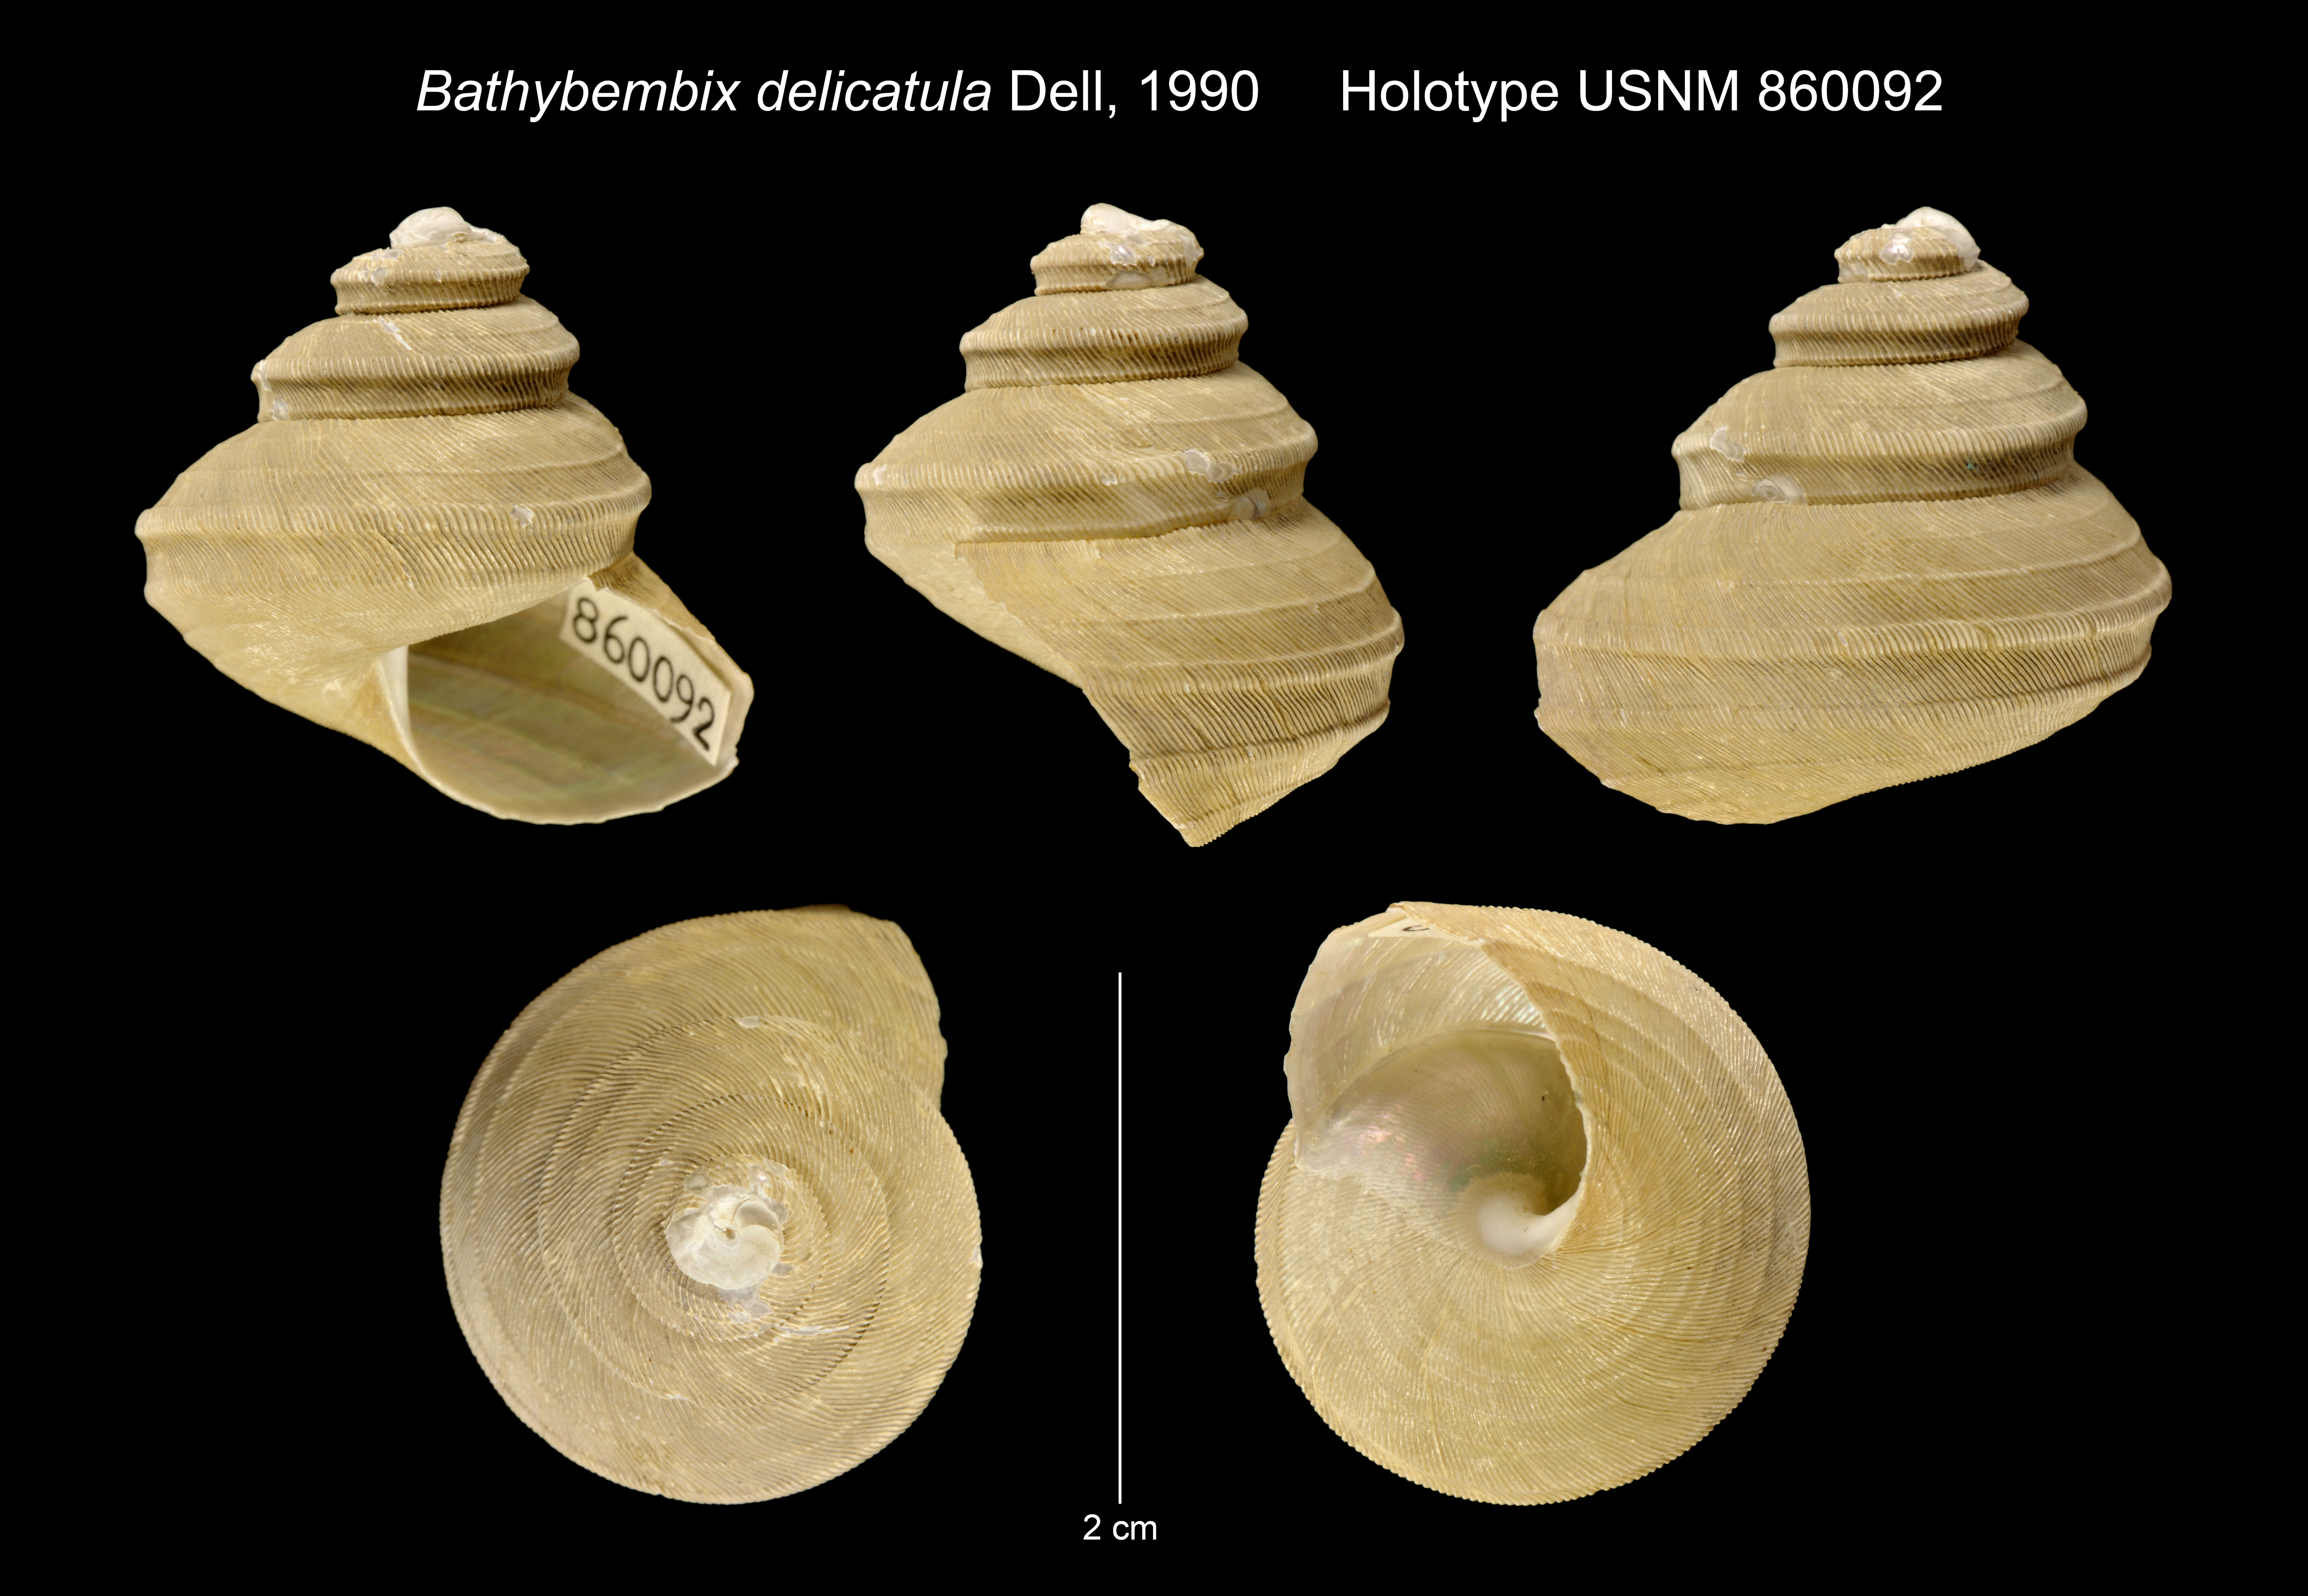 Image of Bathybembix delicatula Dell 1990